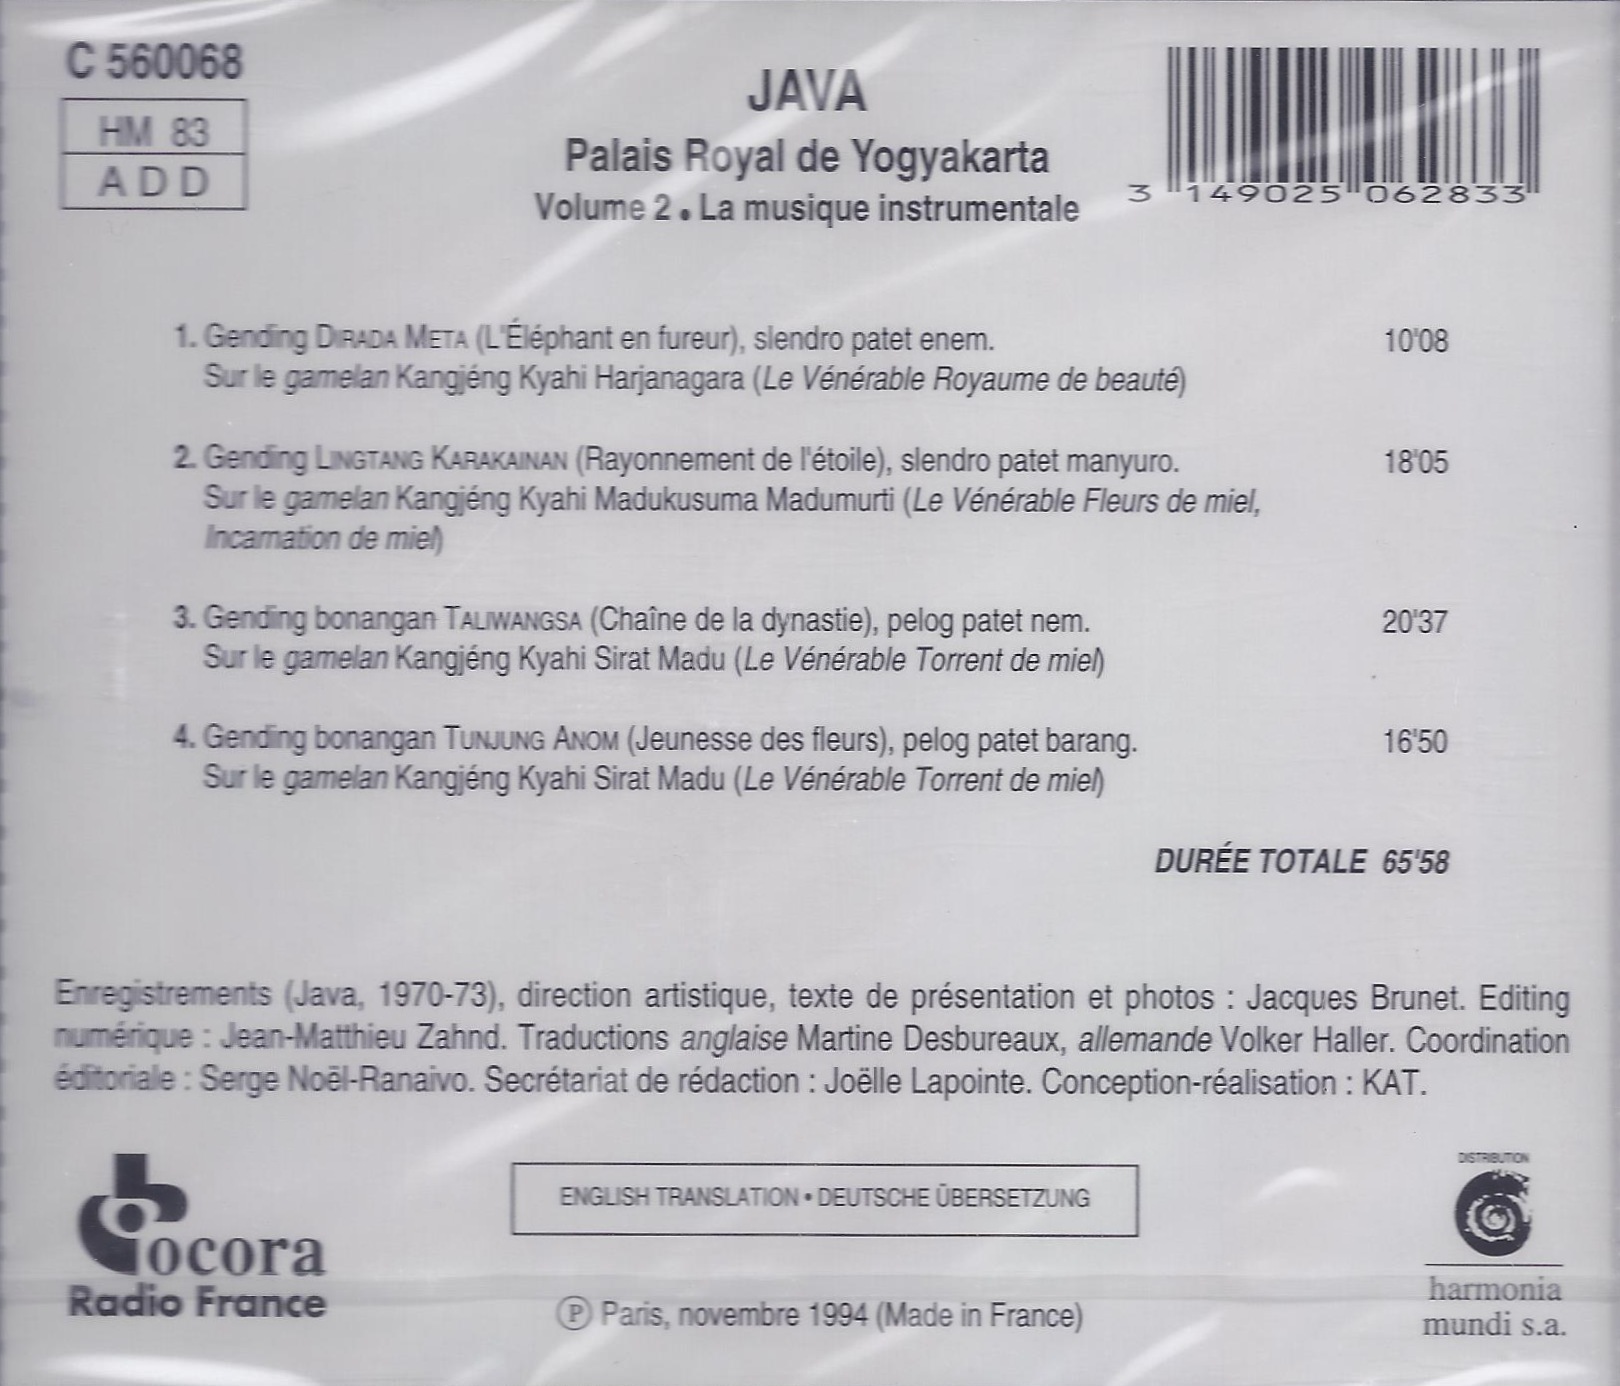 Java-Palace of Yogyakarta-2-Instrumental - slide-1